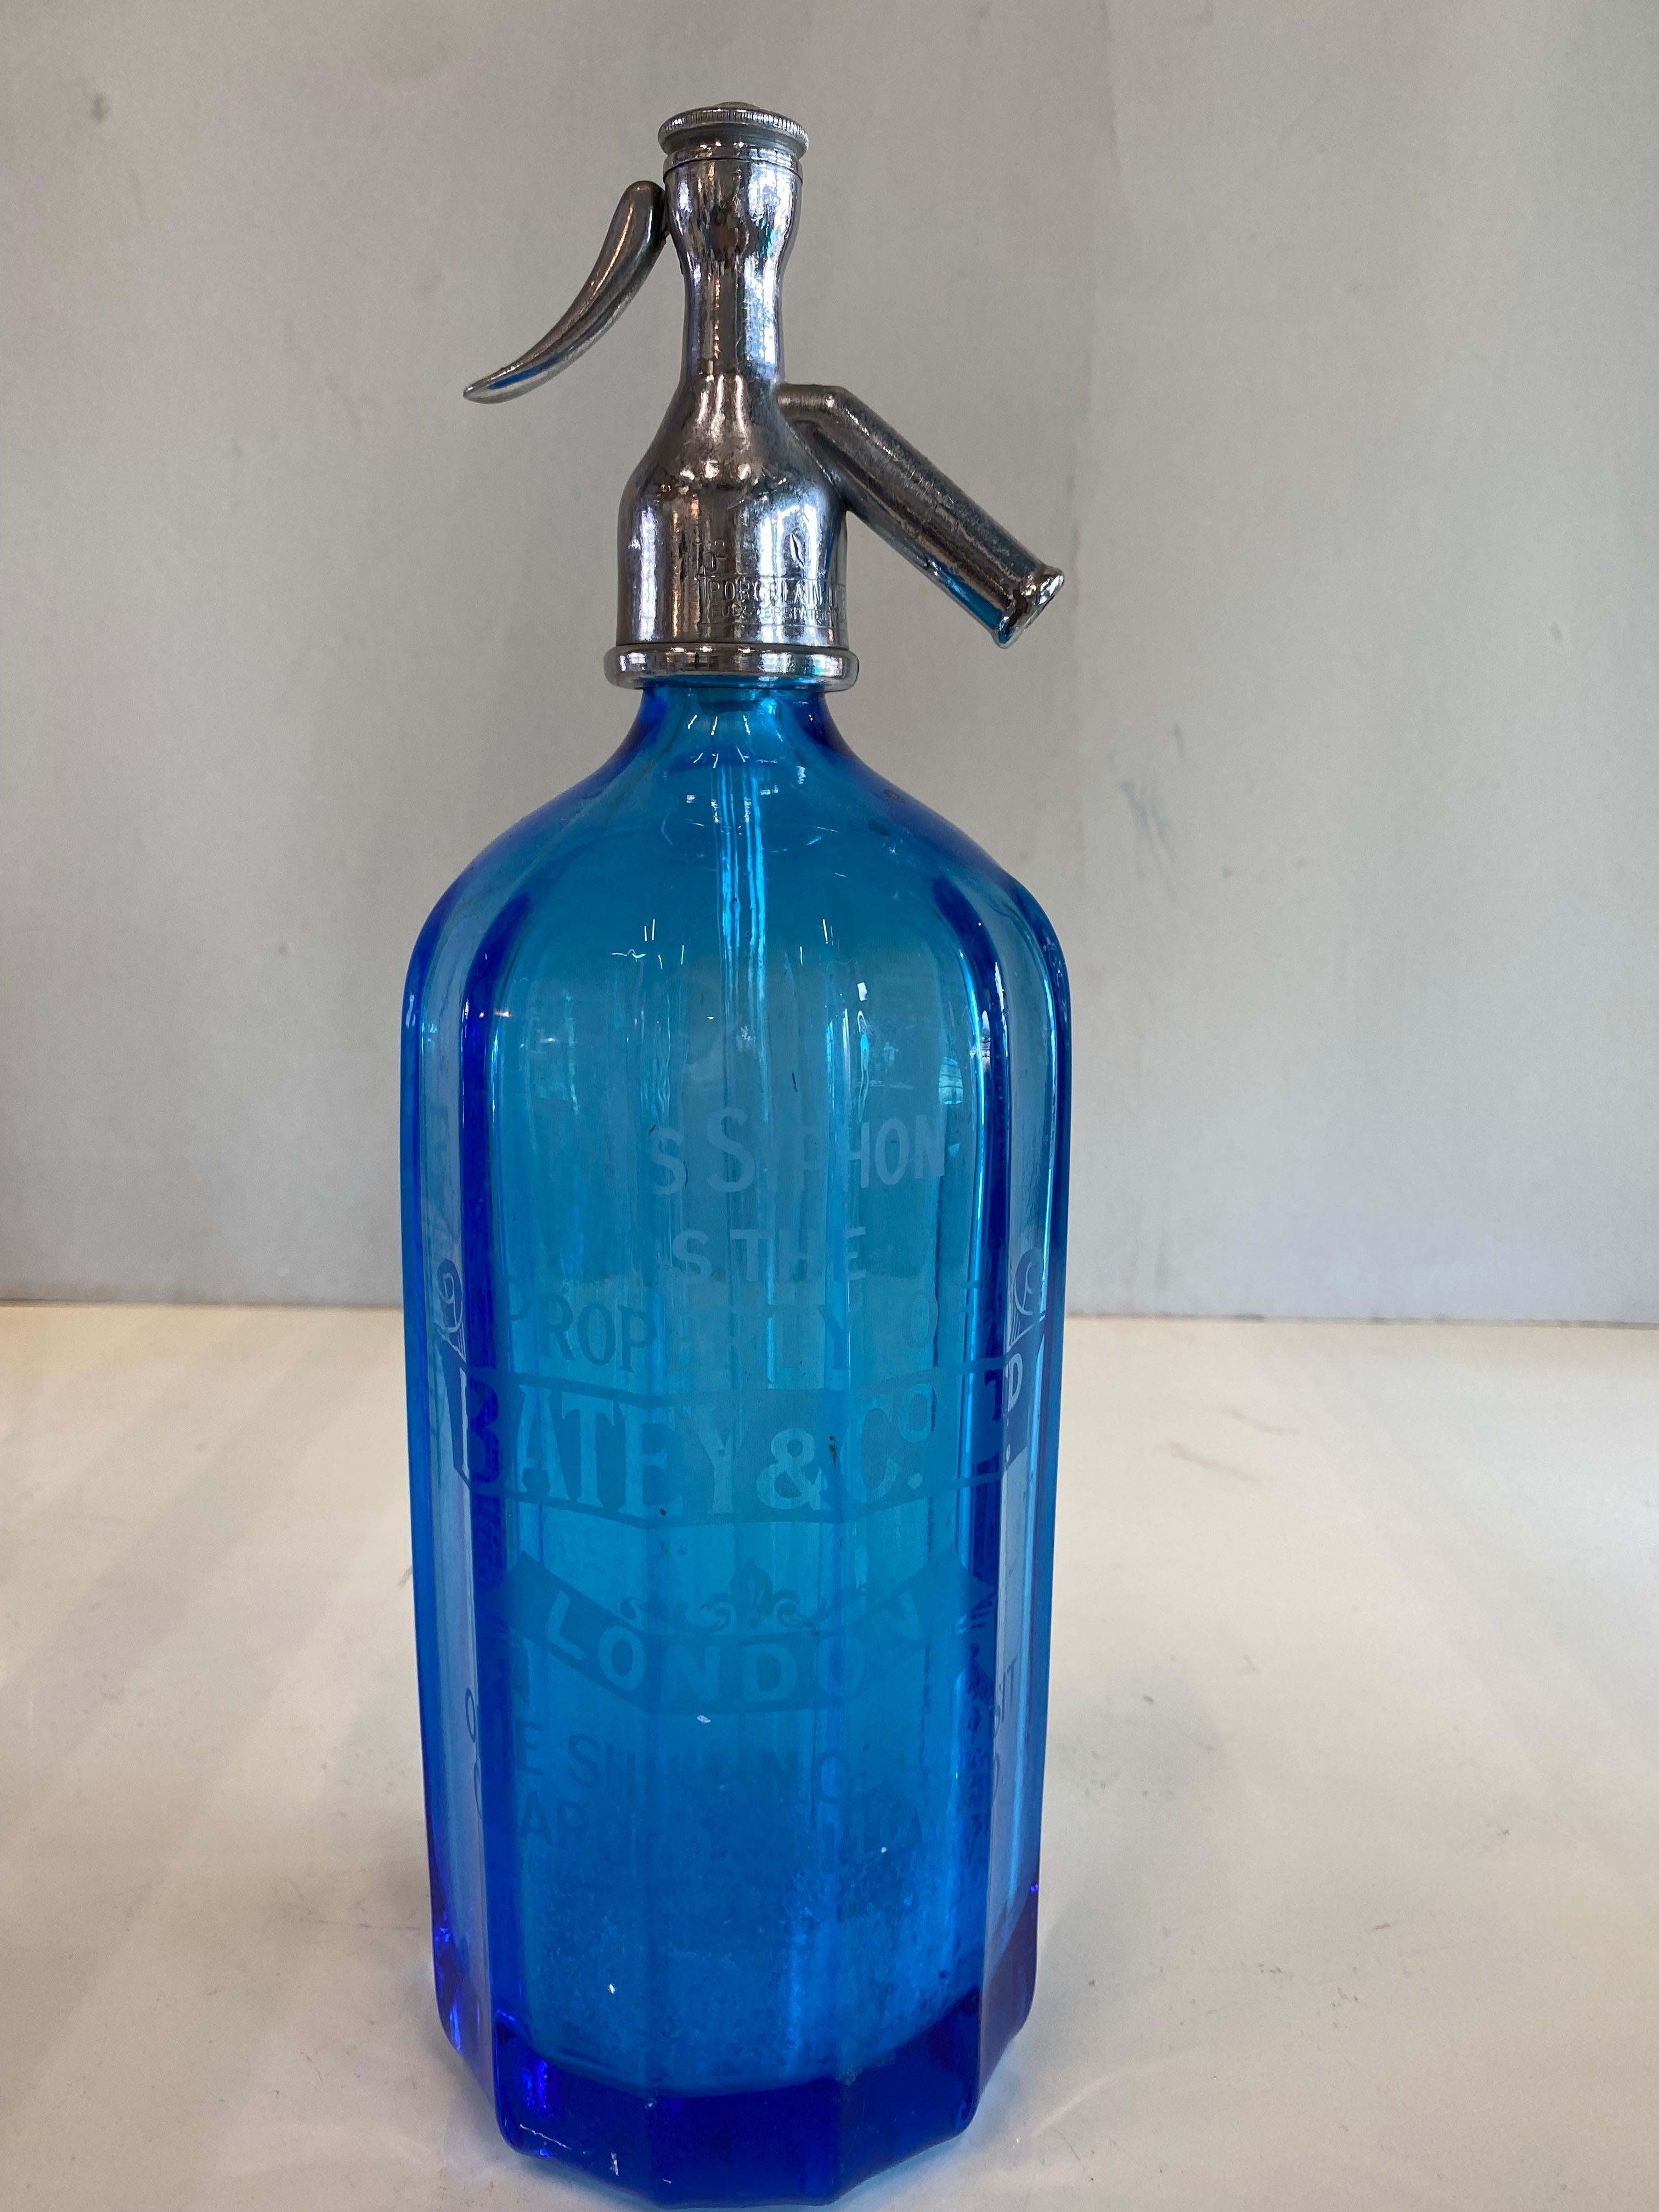 Seltzer-Soda-Seidenflaschen-Set im Jugendstil, blaues Glas, türkisfarbenes Glas (Art nouveau) im Angebot